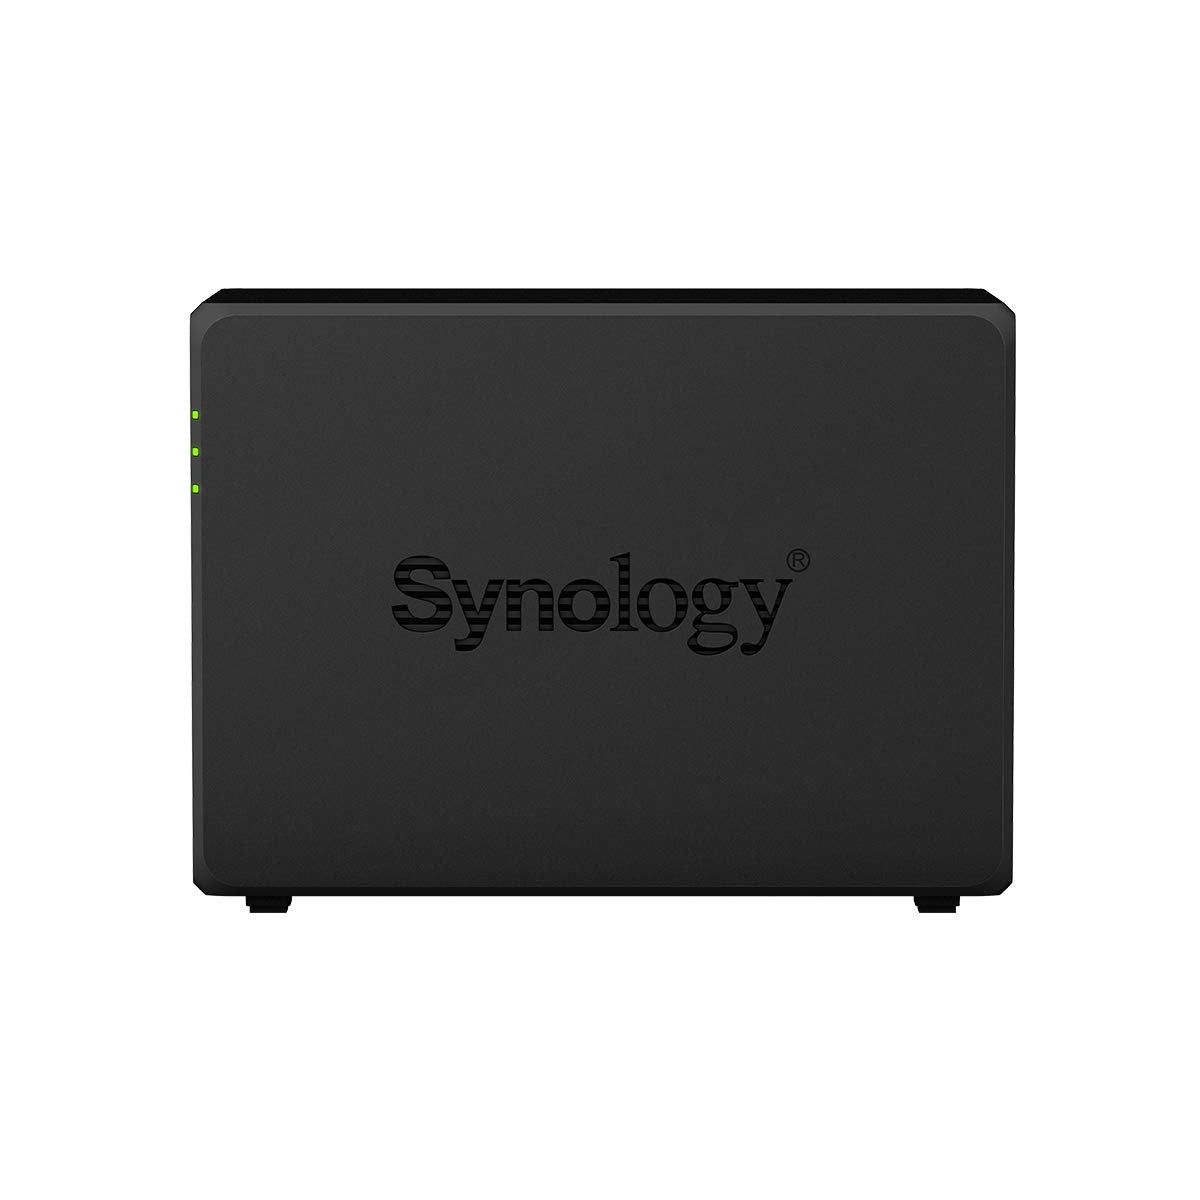 Synology DiskStation DS720+ नेटवर्क अटैच्ड स्टोरेज NAS ड्राइव बिल्ट-इन M.2 SSD स्लॉट के साथ